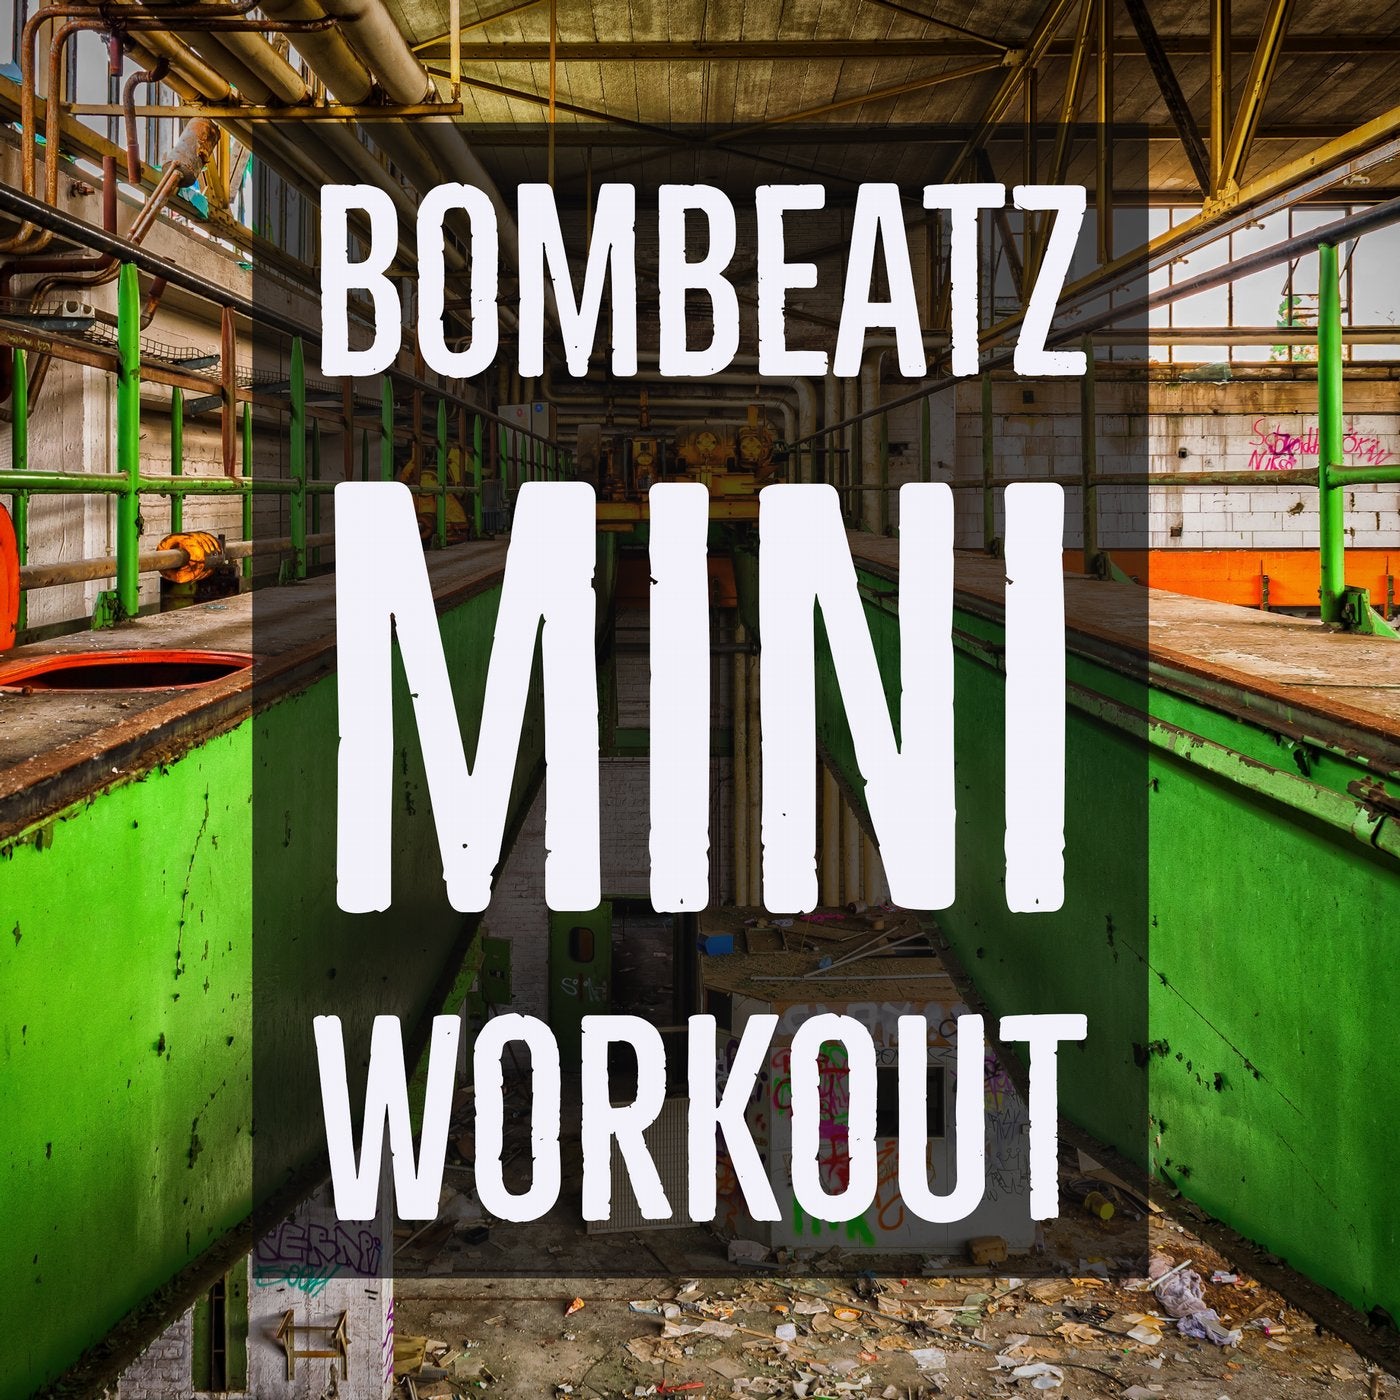 Bombeatz Mini Workout